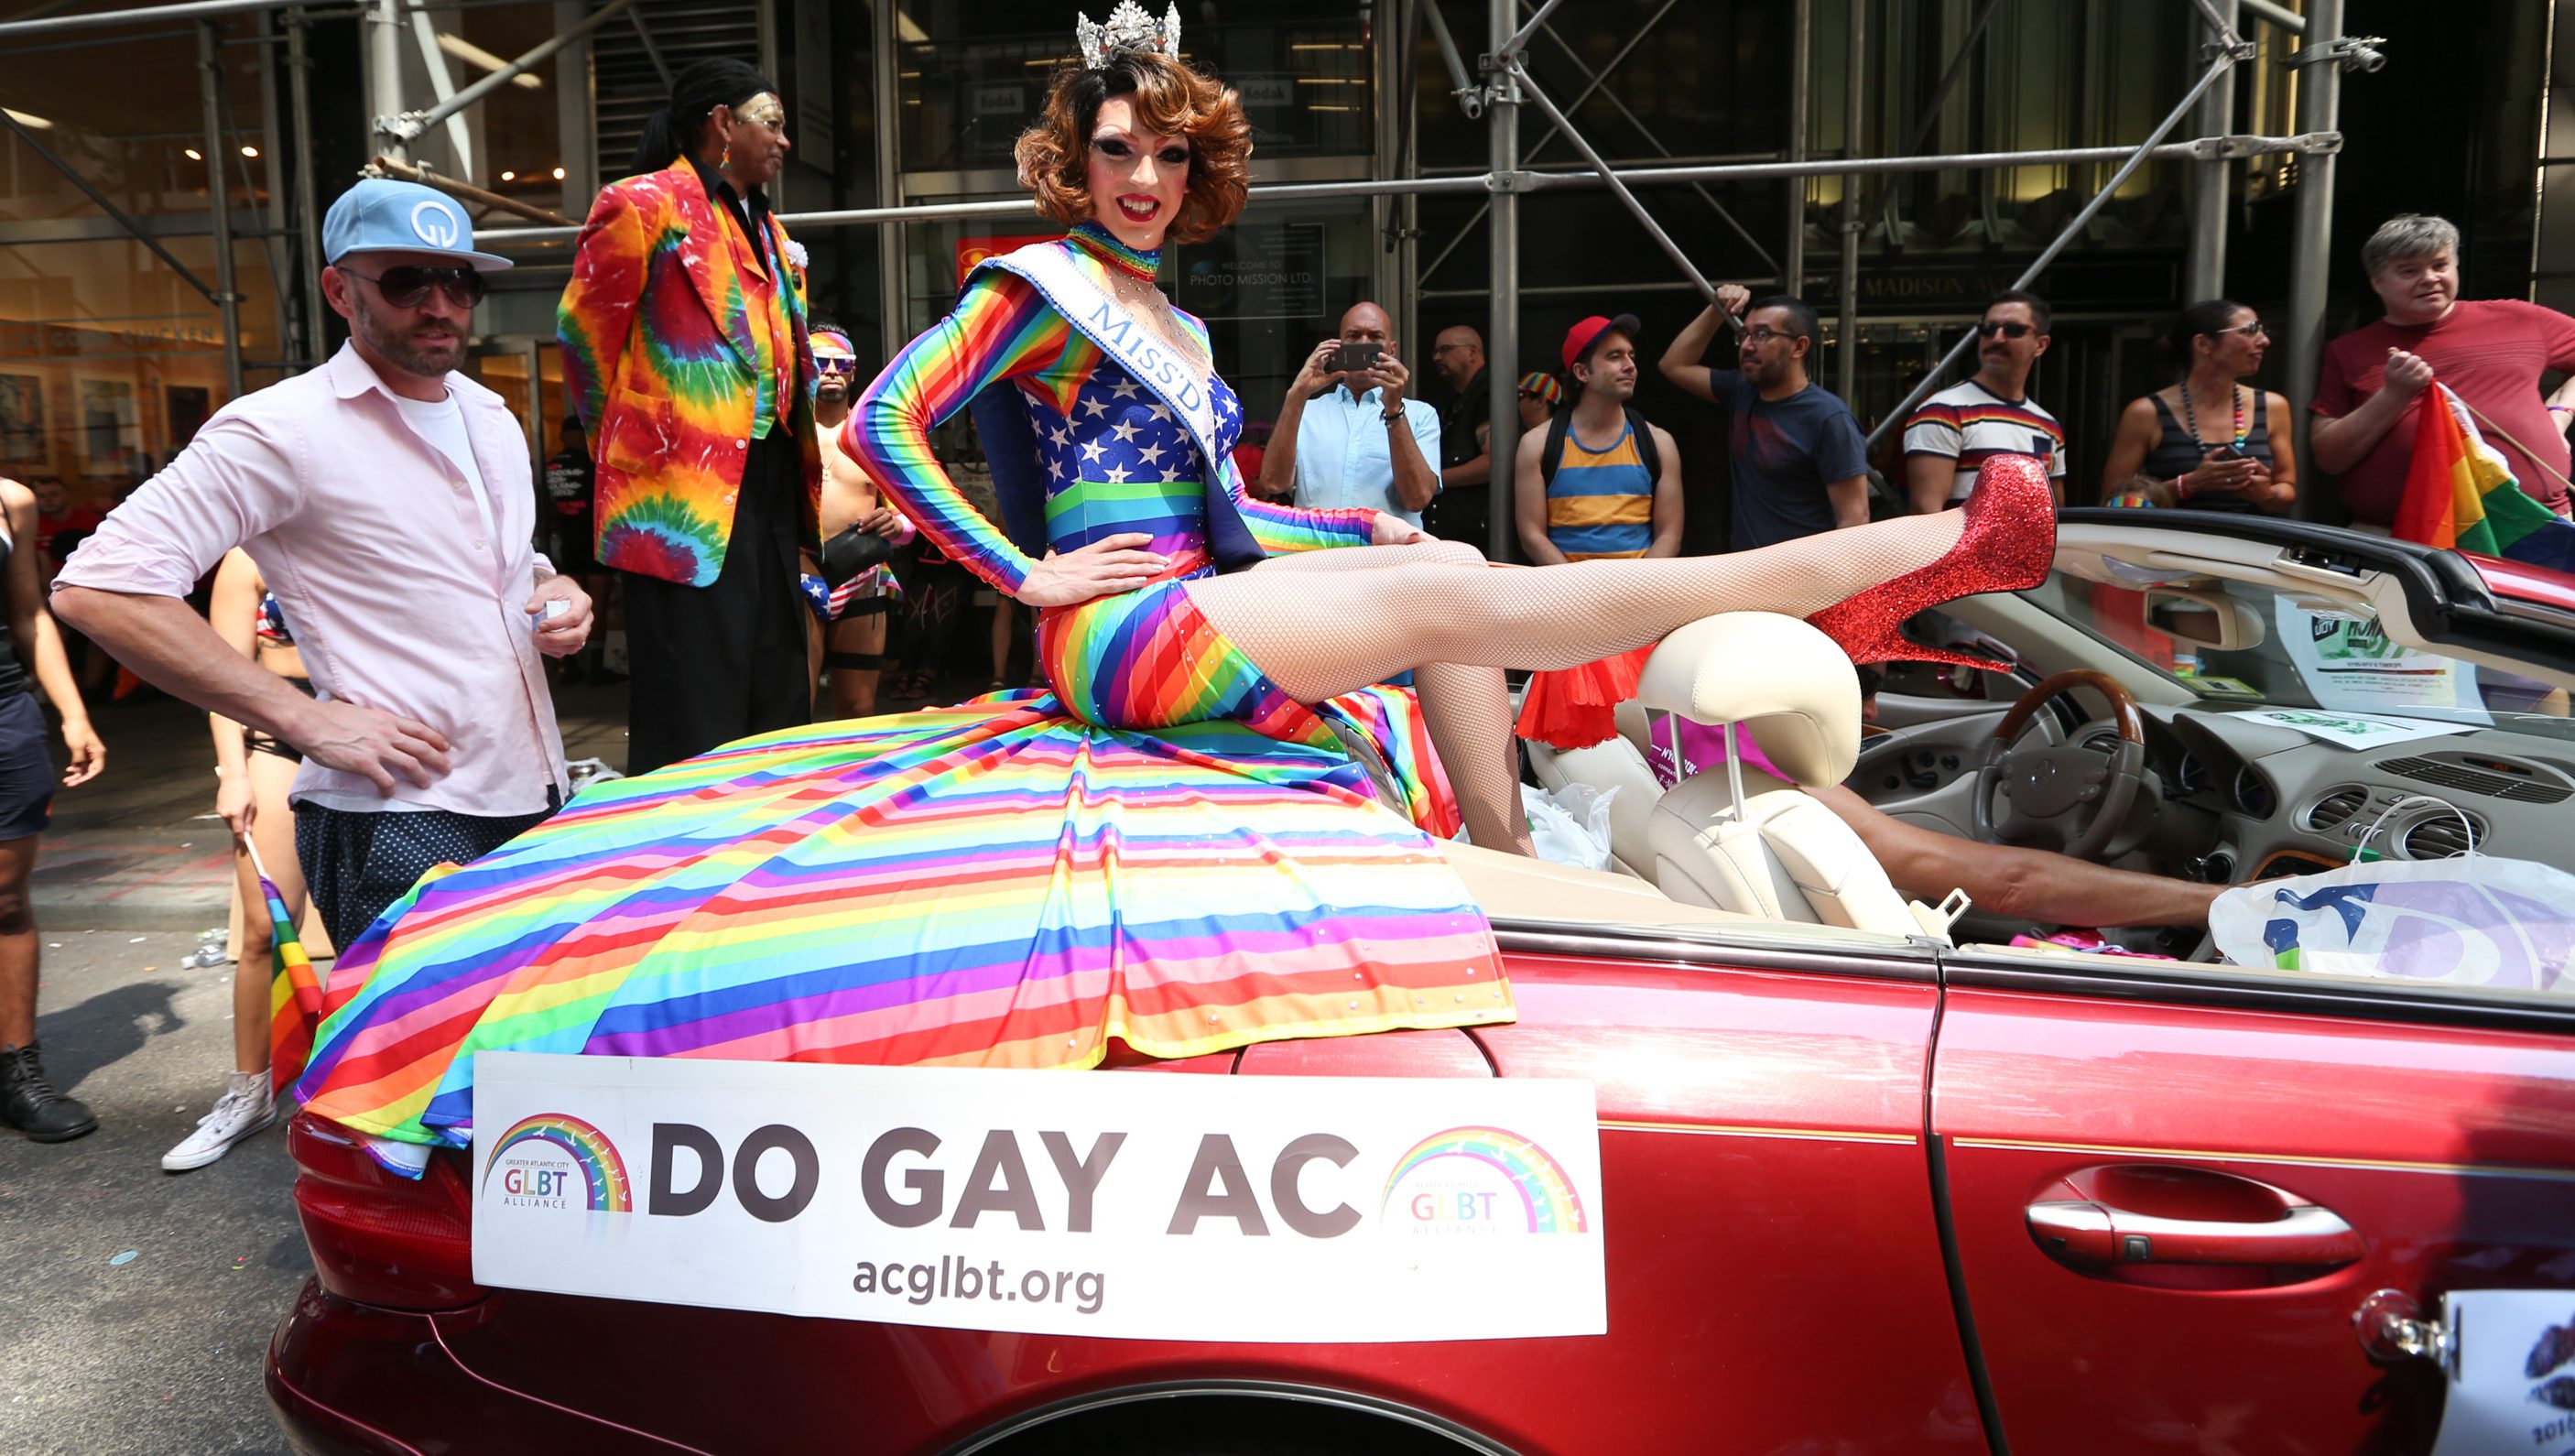 When was philadelphia first gay pride parade